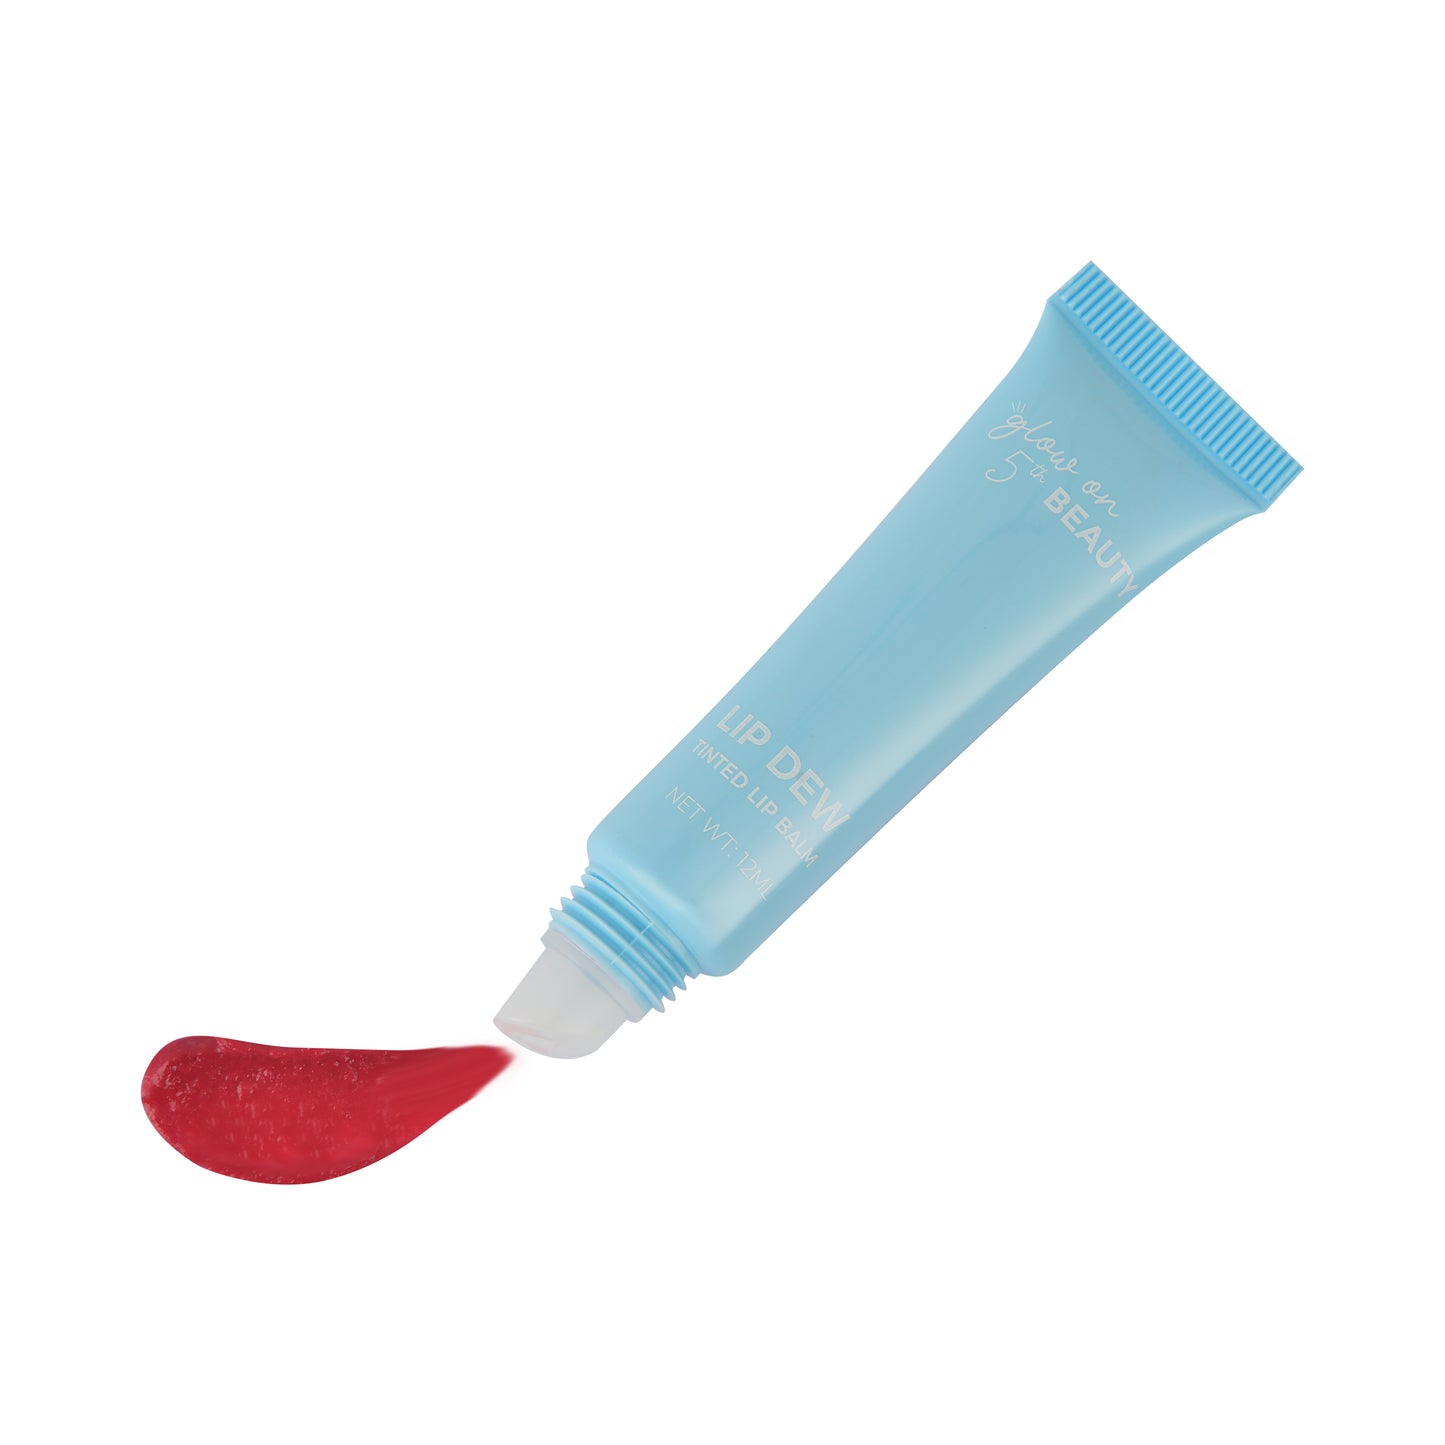 LIP DEW - Tinted Lip Balm - PLUM